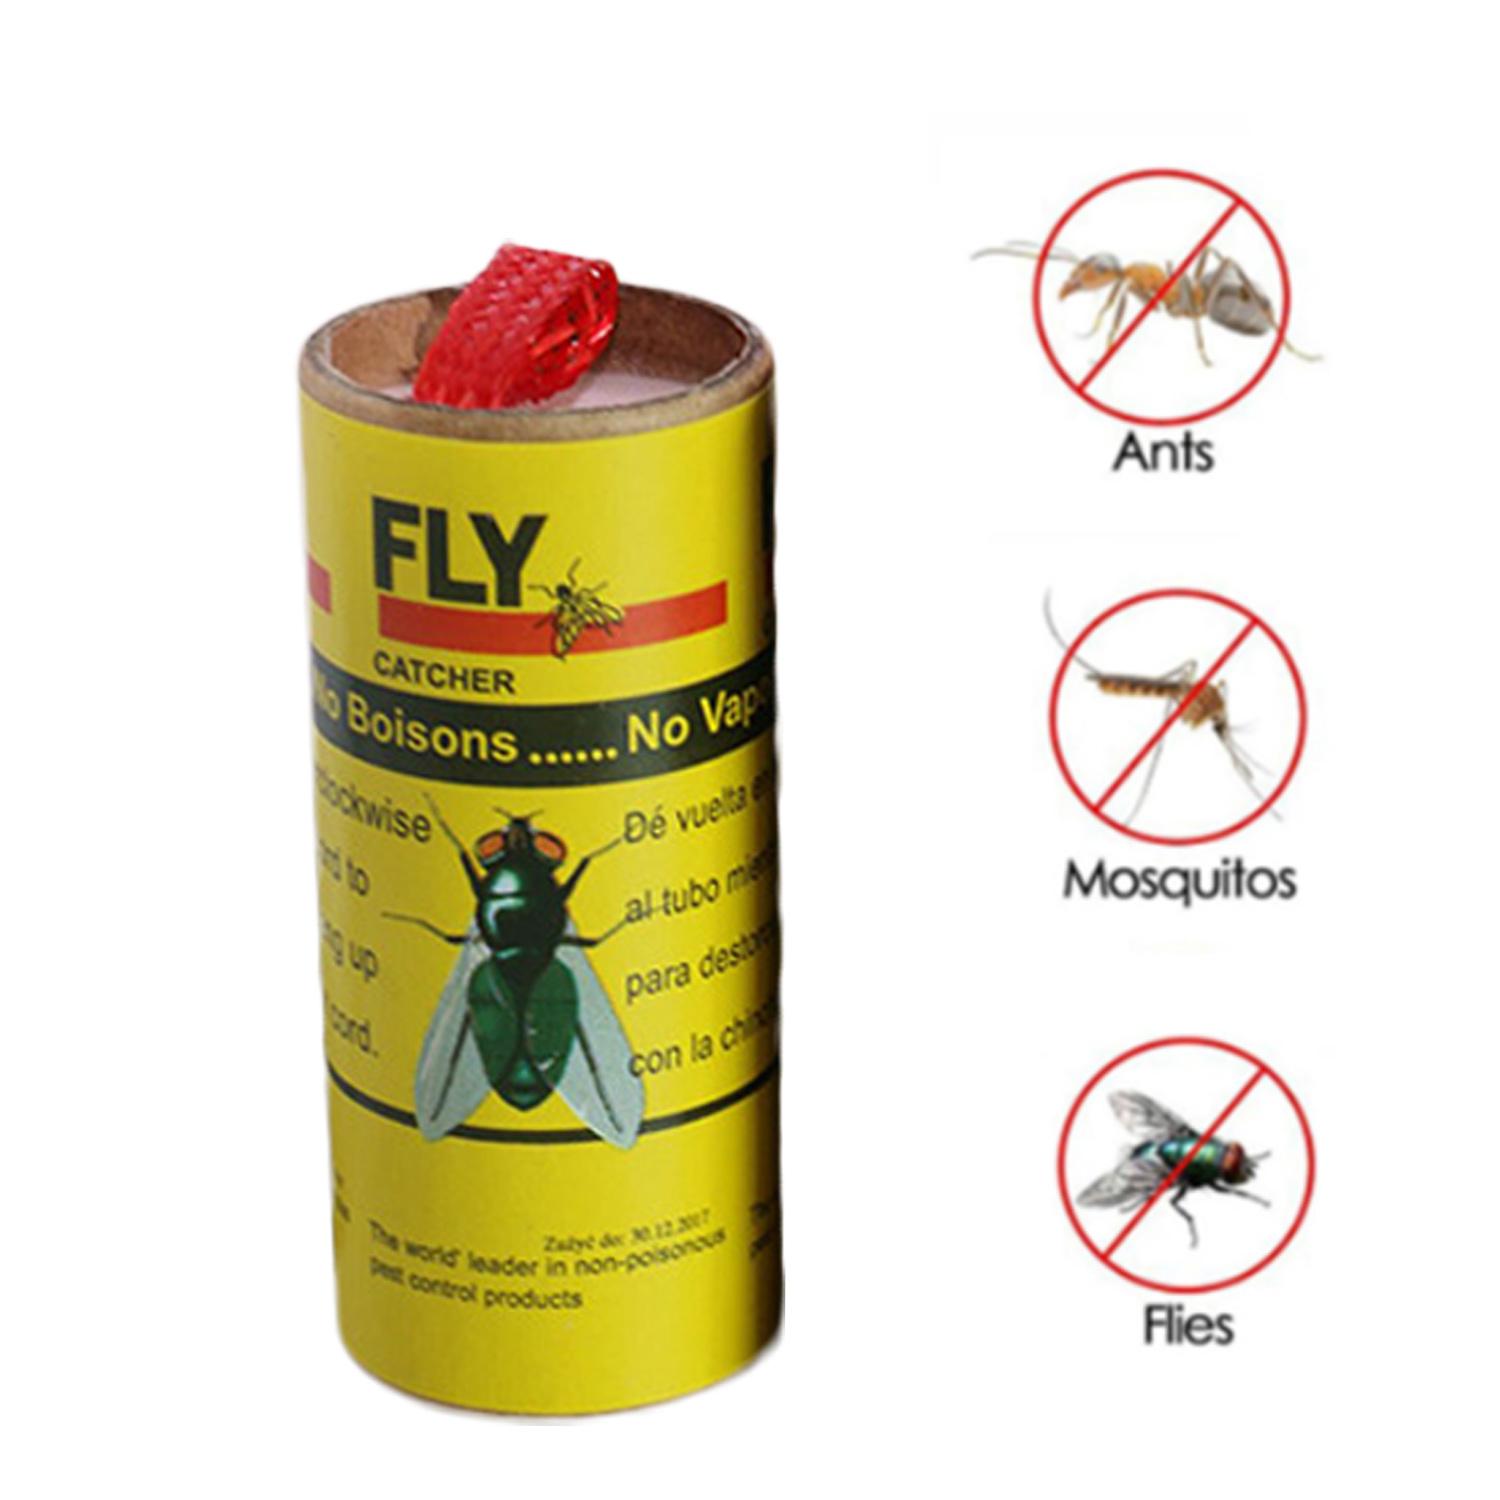 flies catcher products